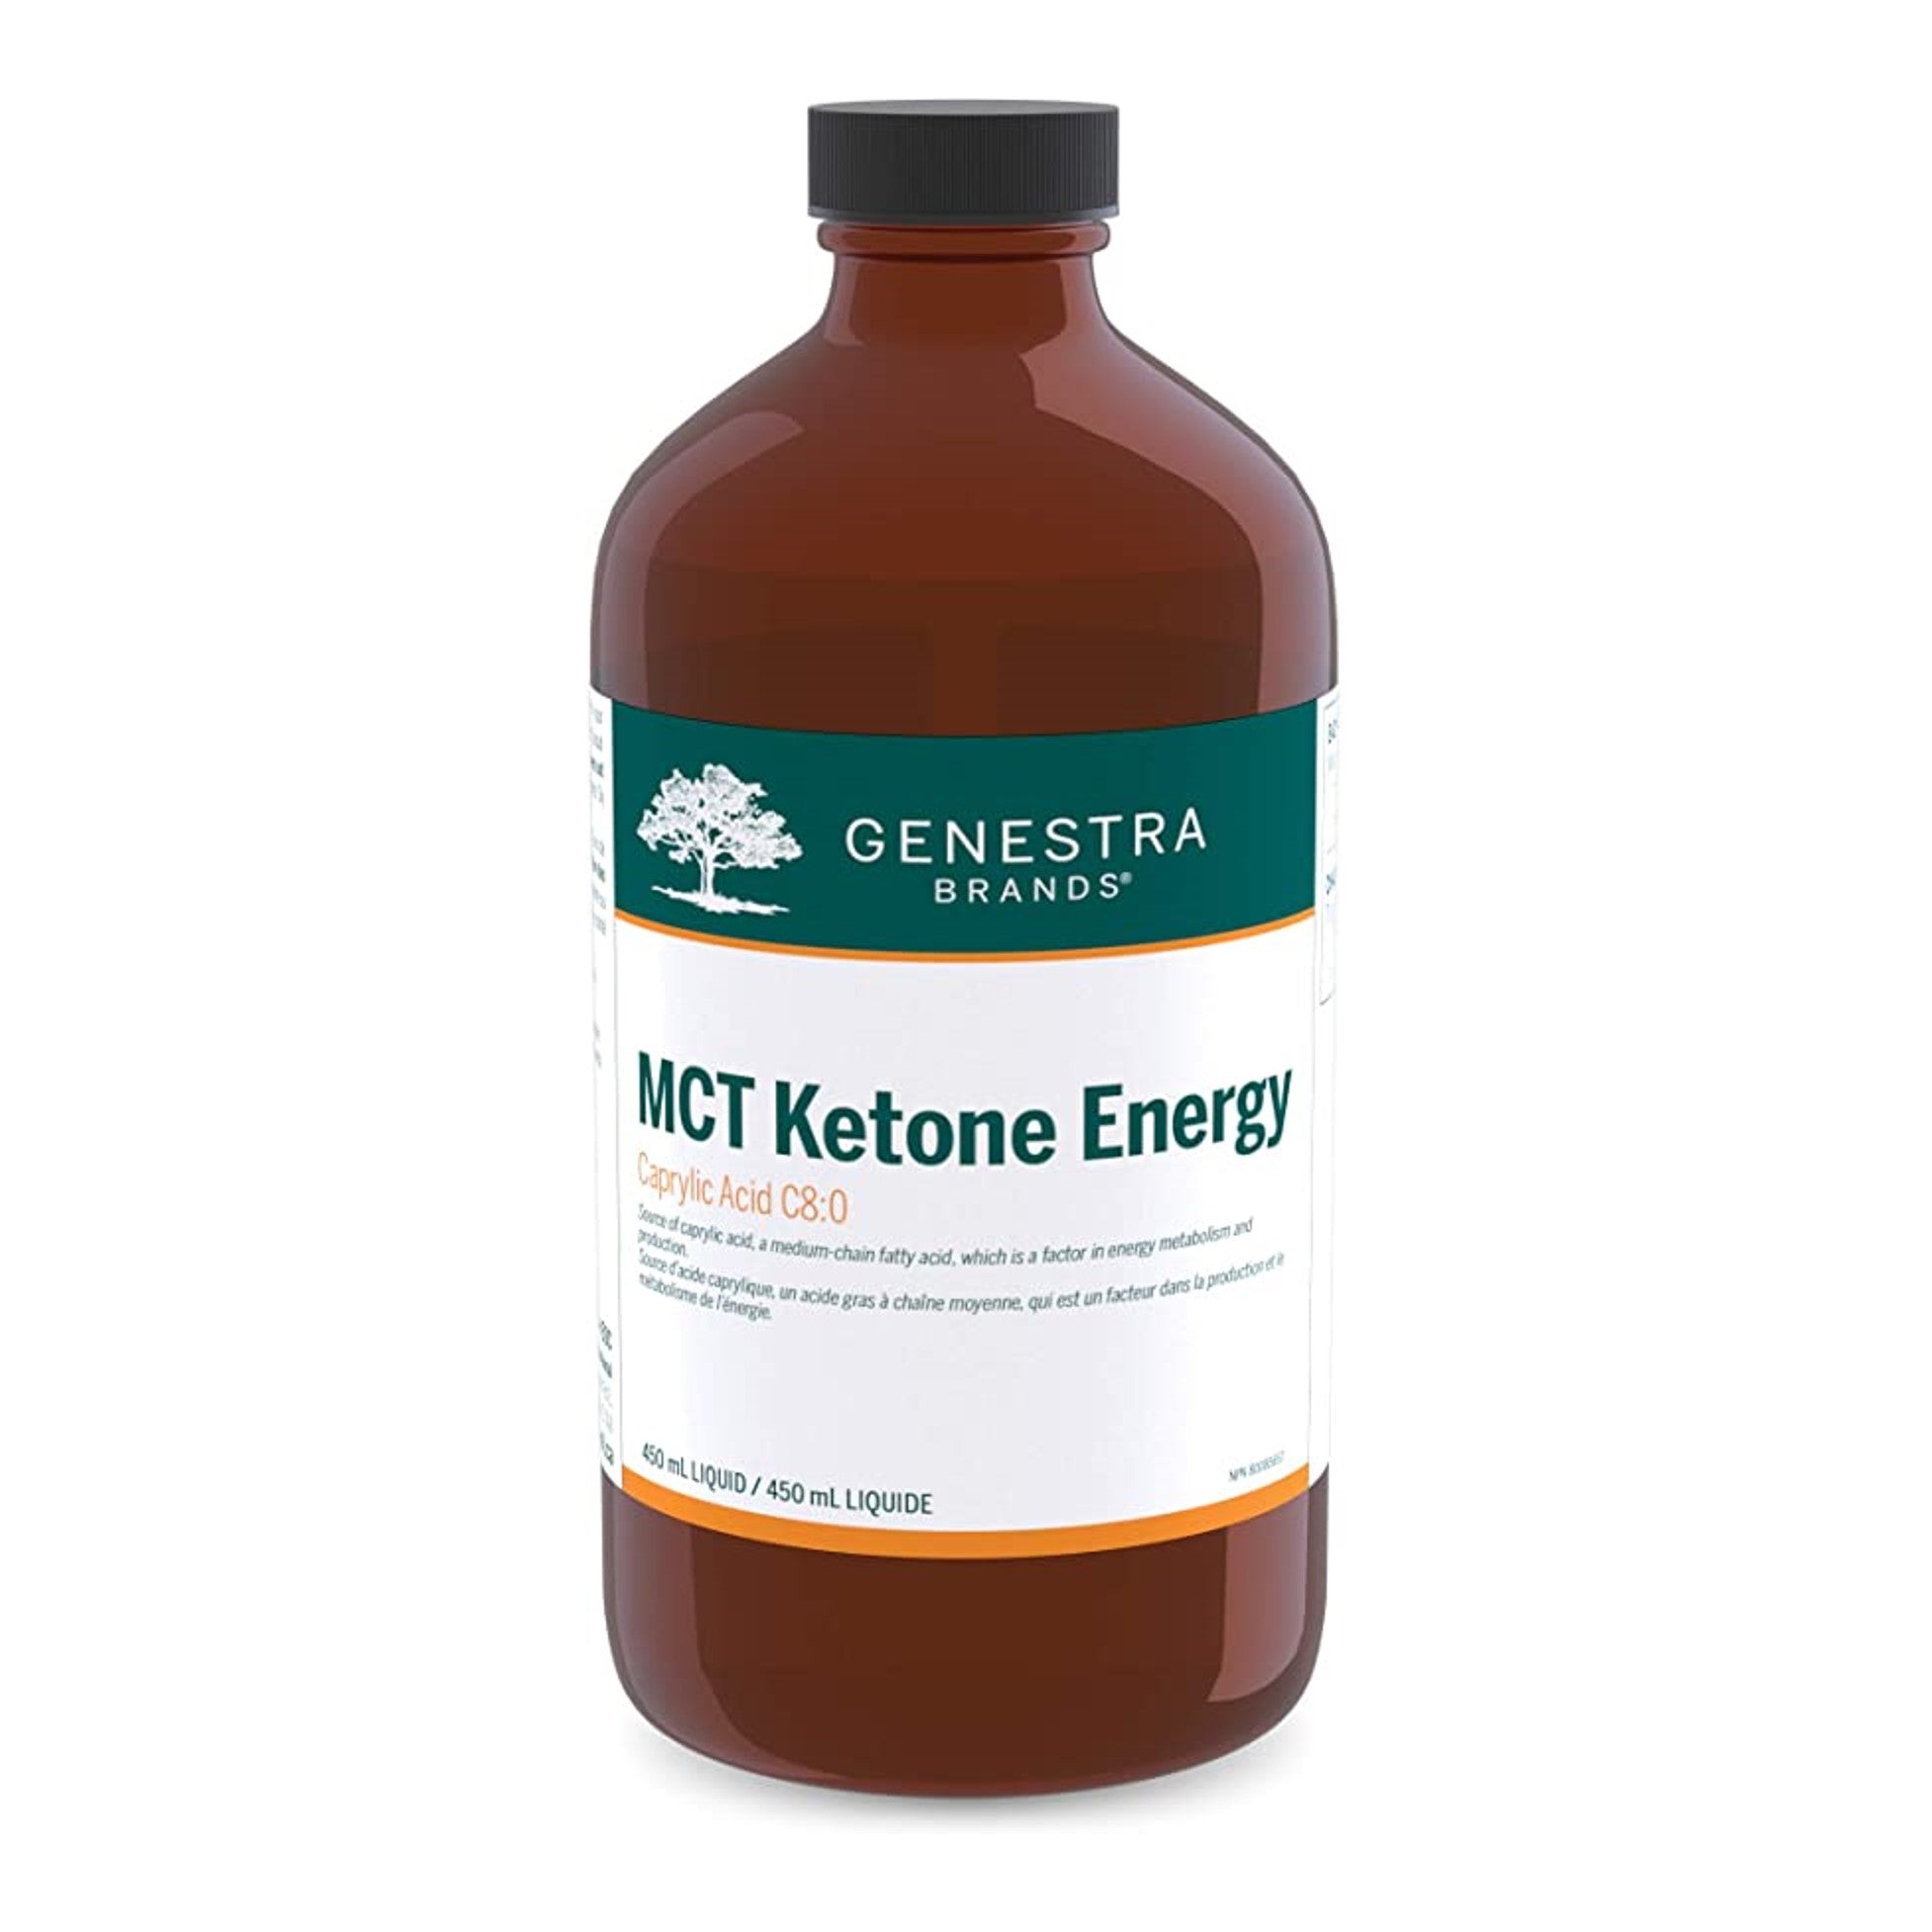 Genestra Brands MCT Ketone Energy 450ml